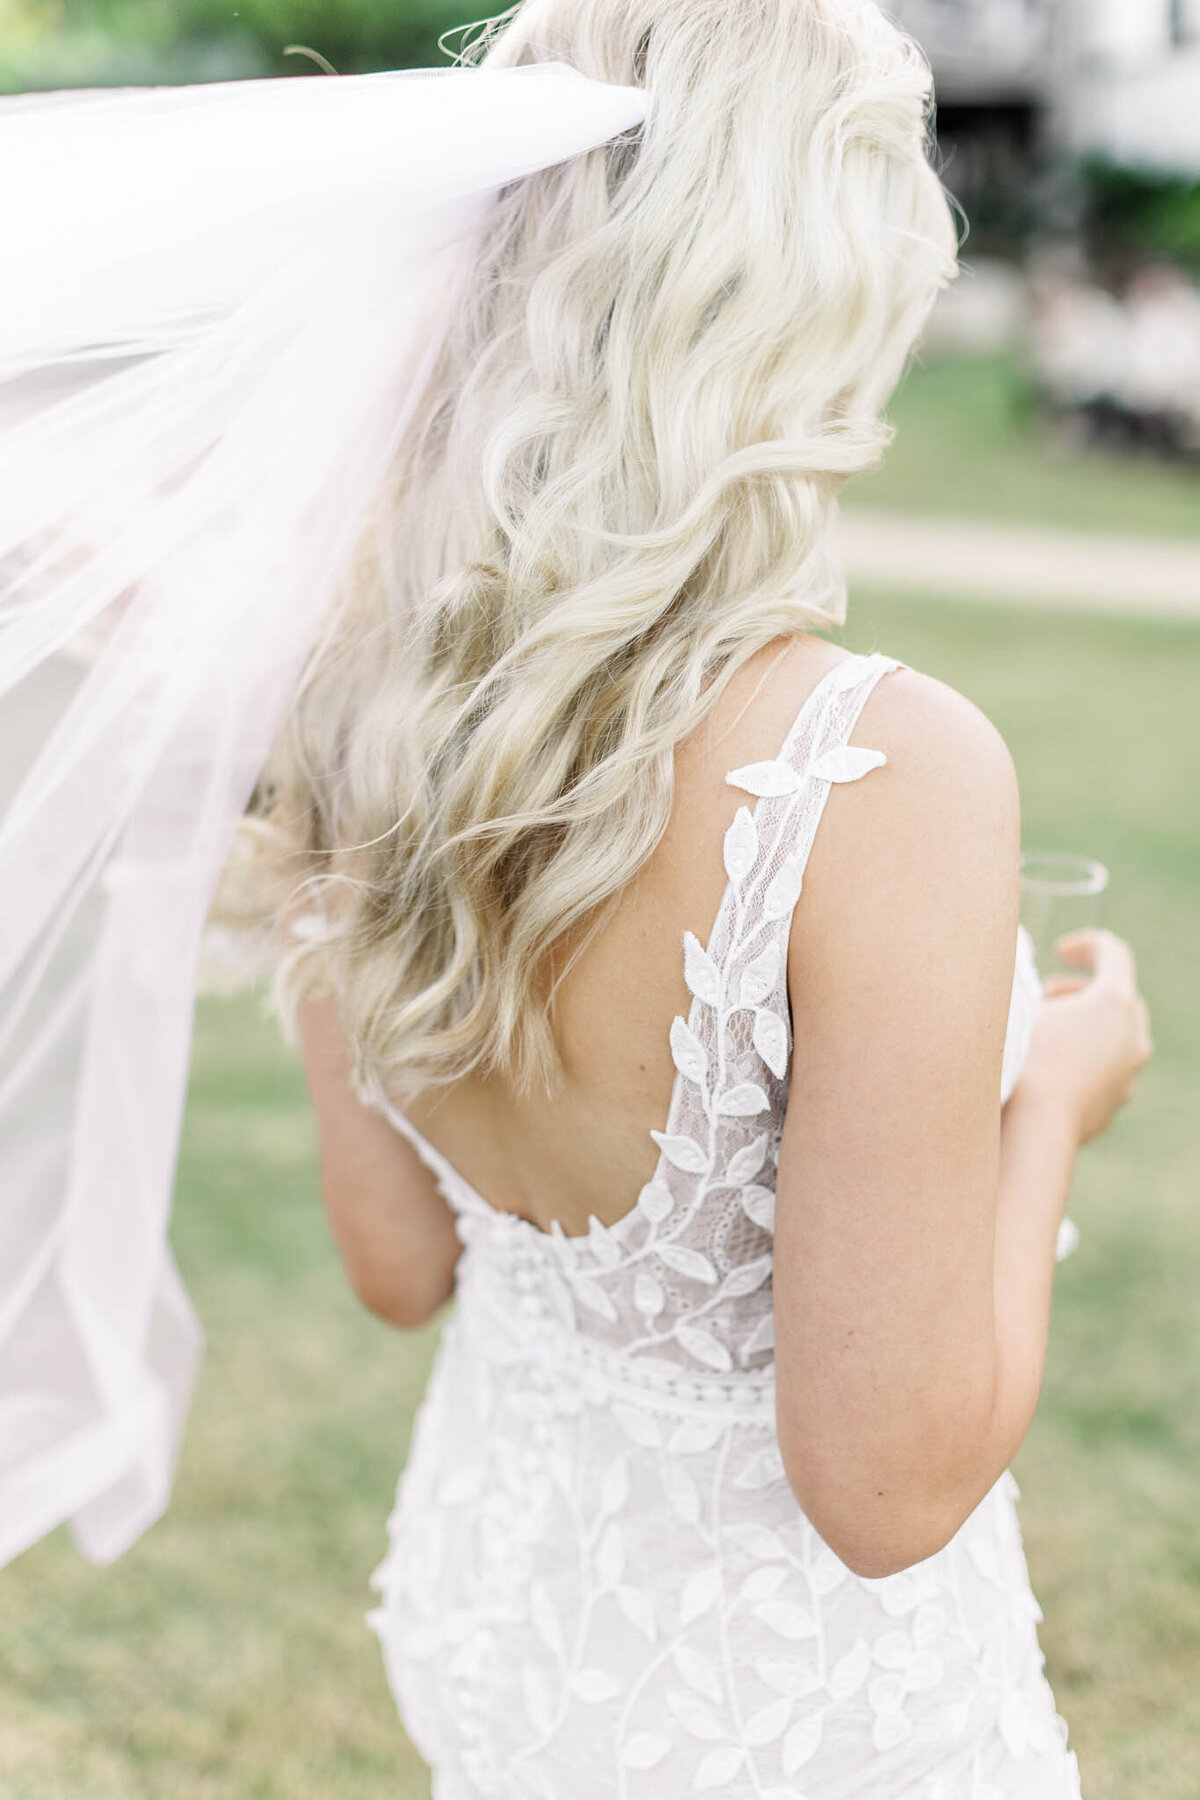 detail photo of bride's delicate wedding dress